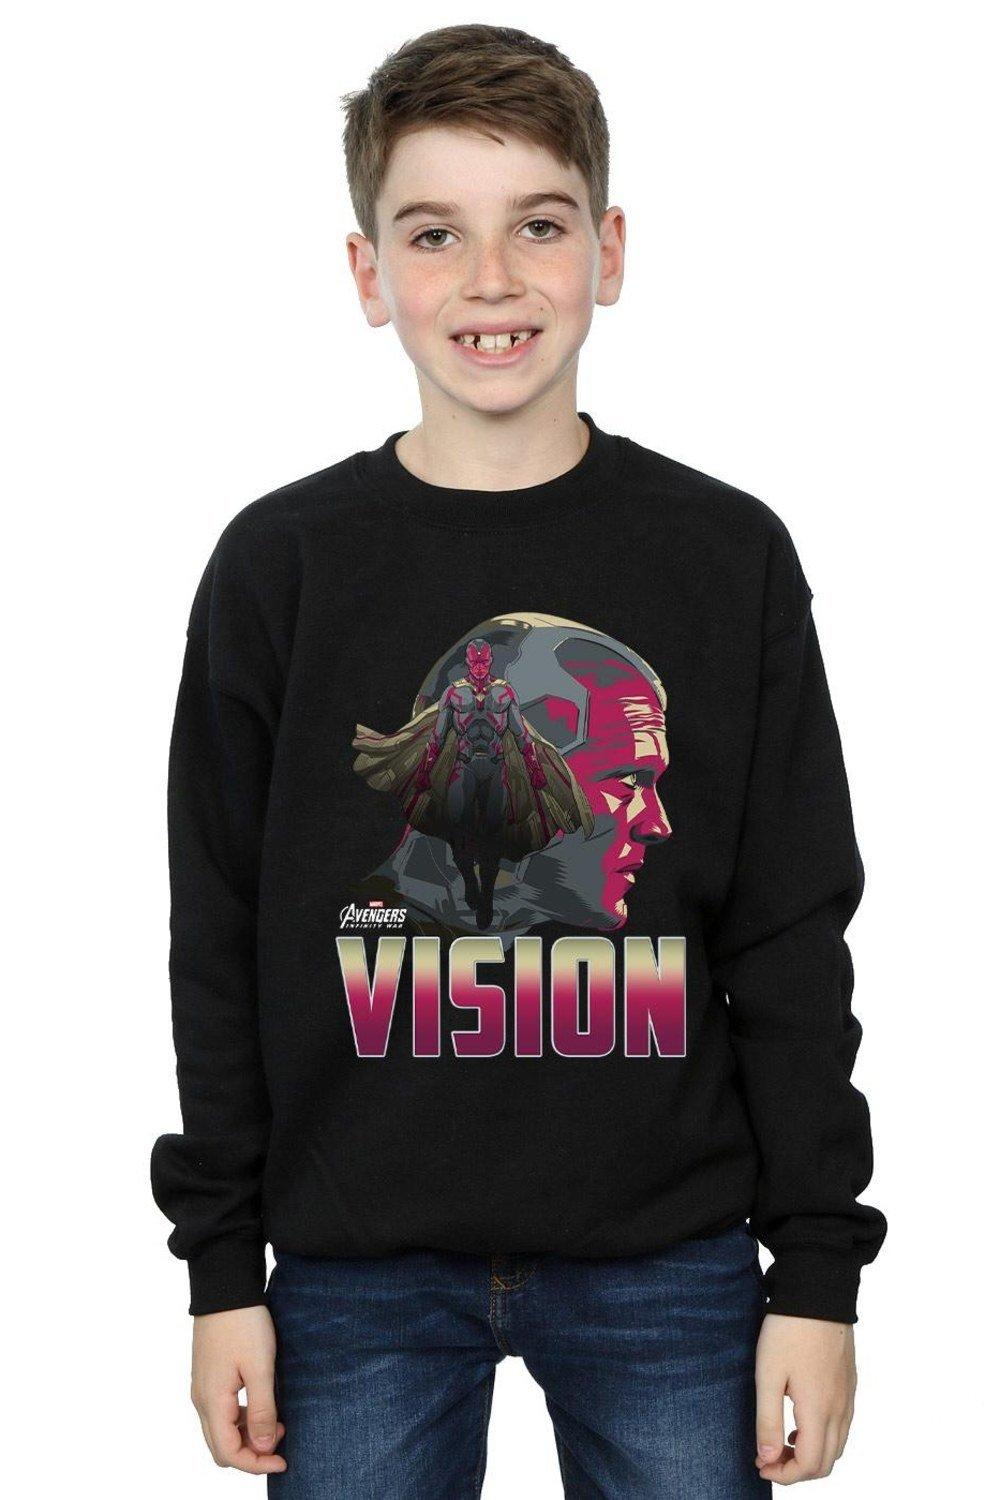 Avengers Infinity War Vision Character Sweatshirt